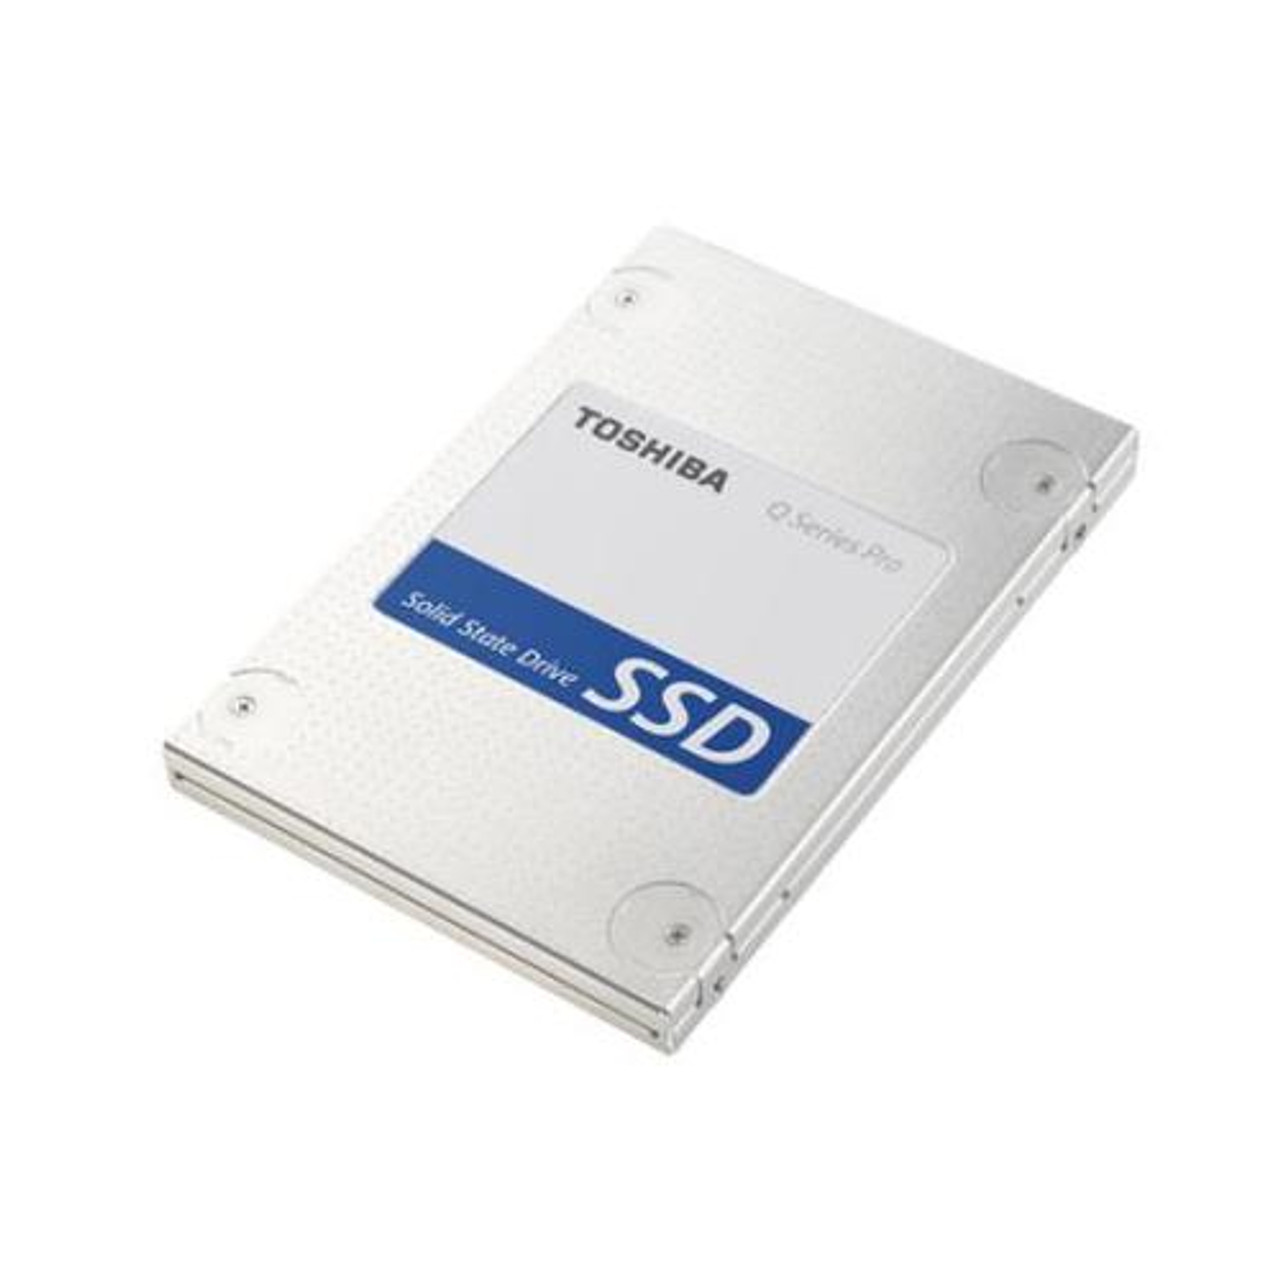 HDTS312XZSTA Toshiba Q Series Pro 128GB MLC SATA 6Gbps 2.5-inch Internal  Solid State Drive (SSD)